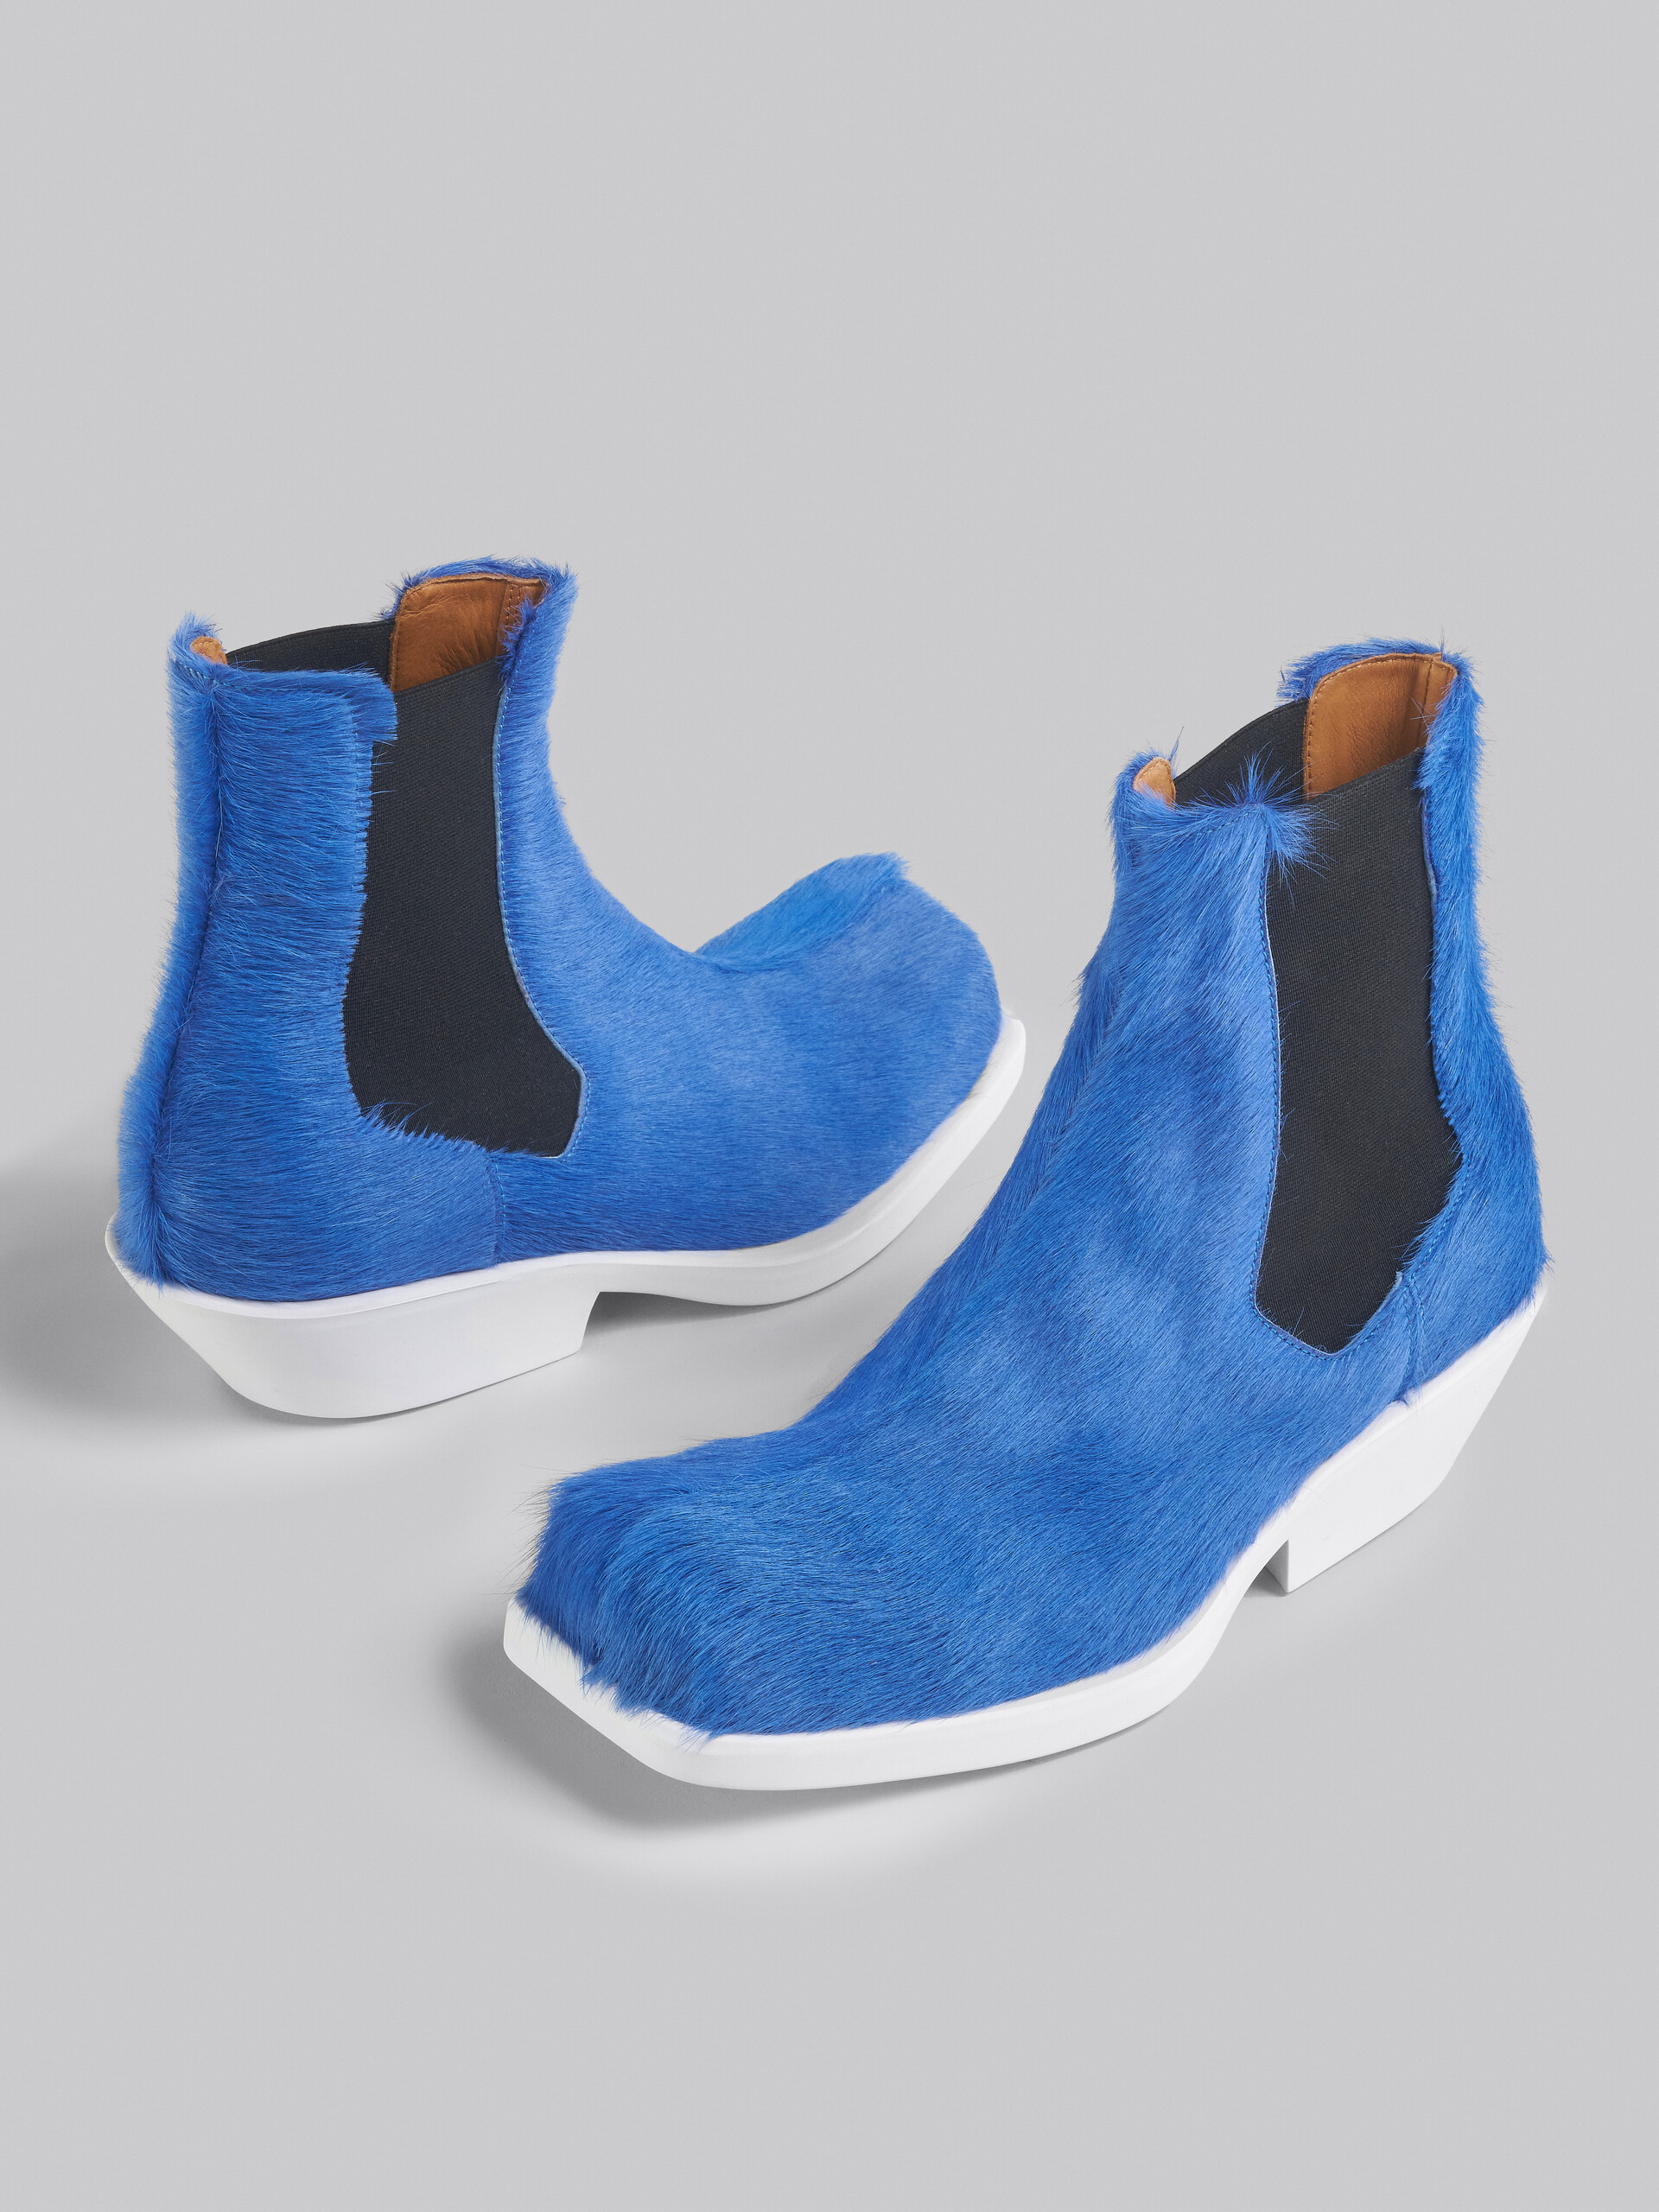 Blue long hair calfskin Chelsea boot - Boots - Image 4